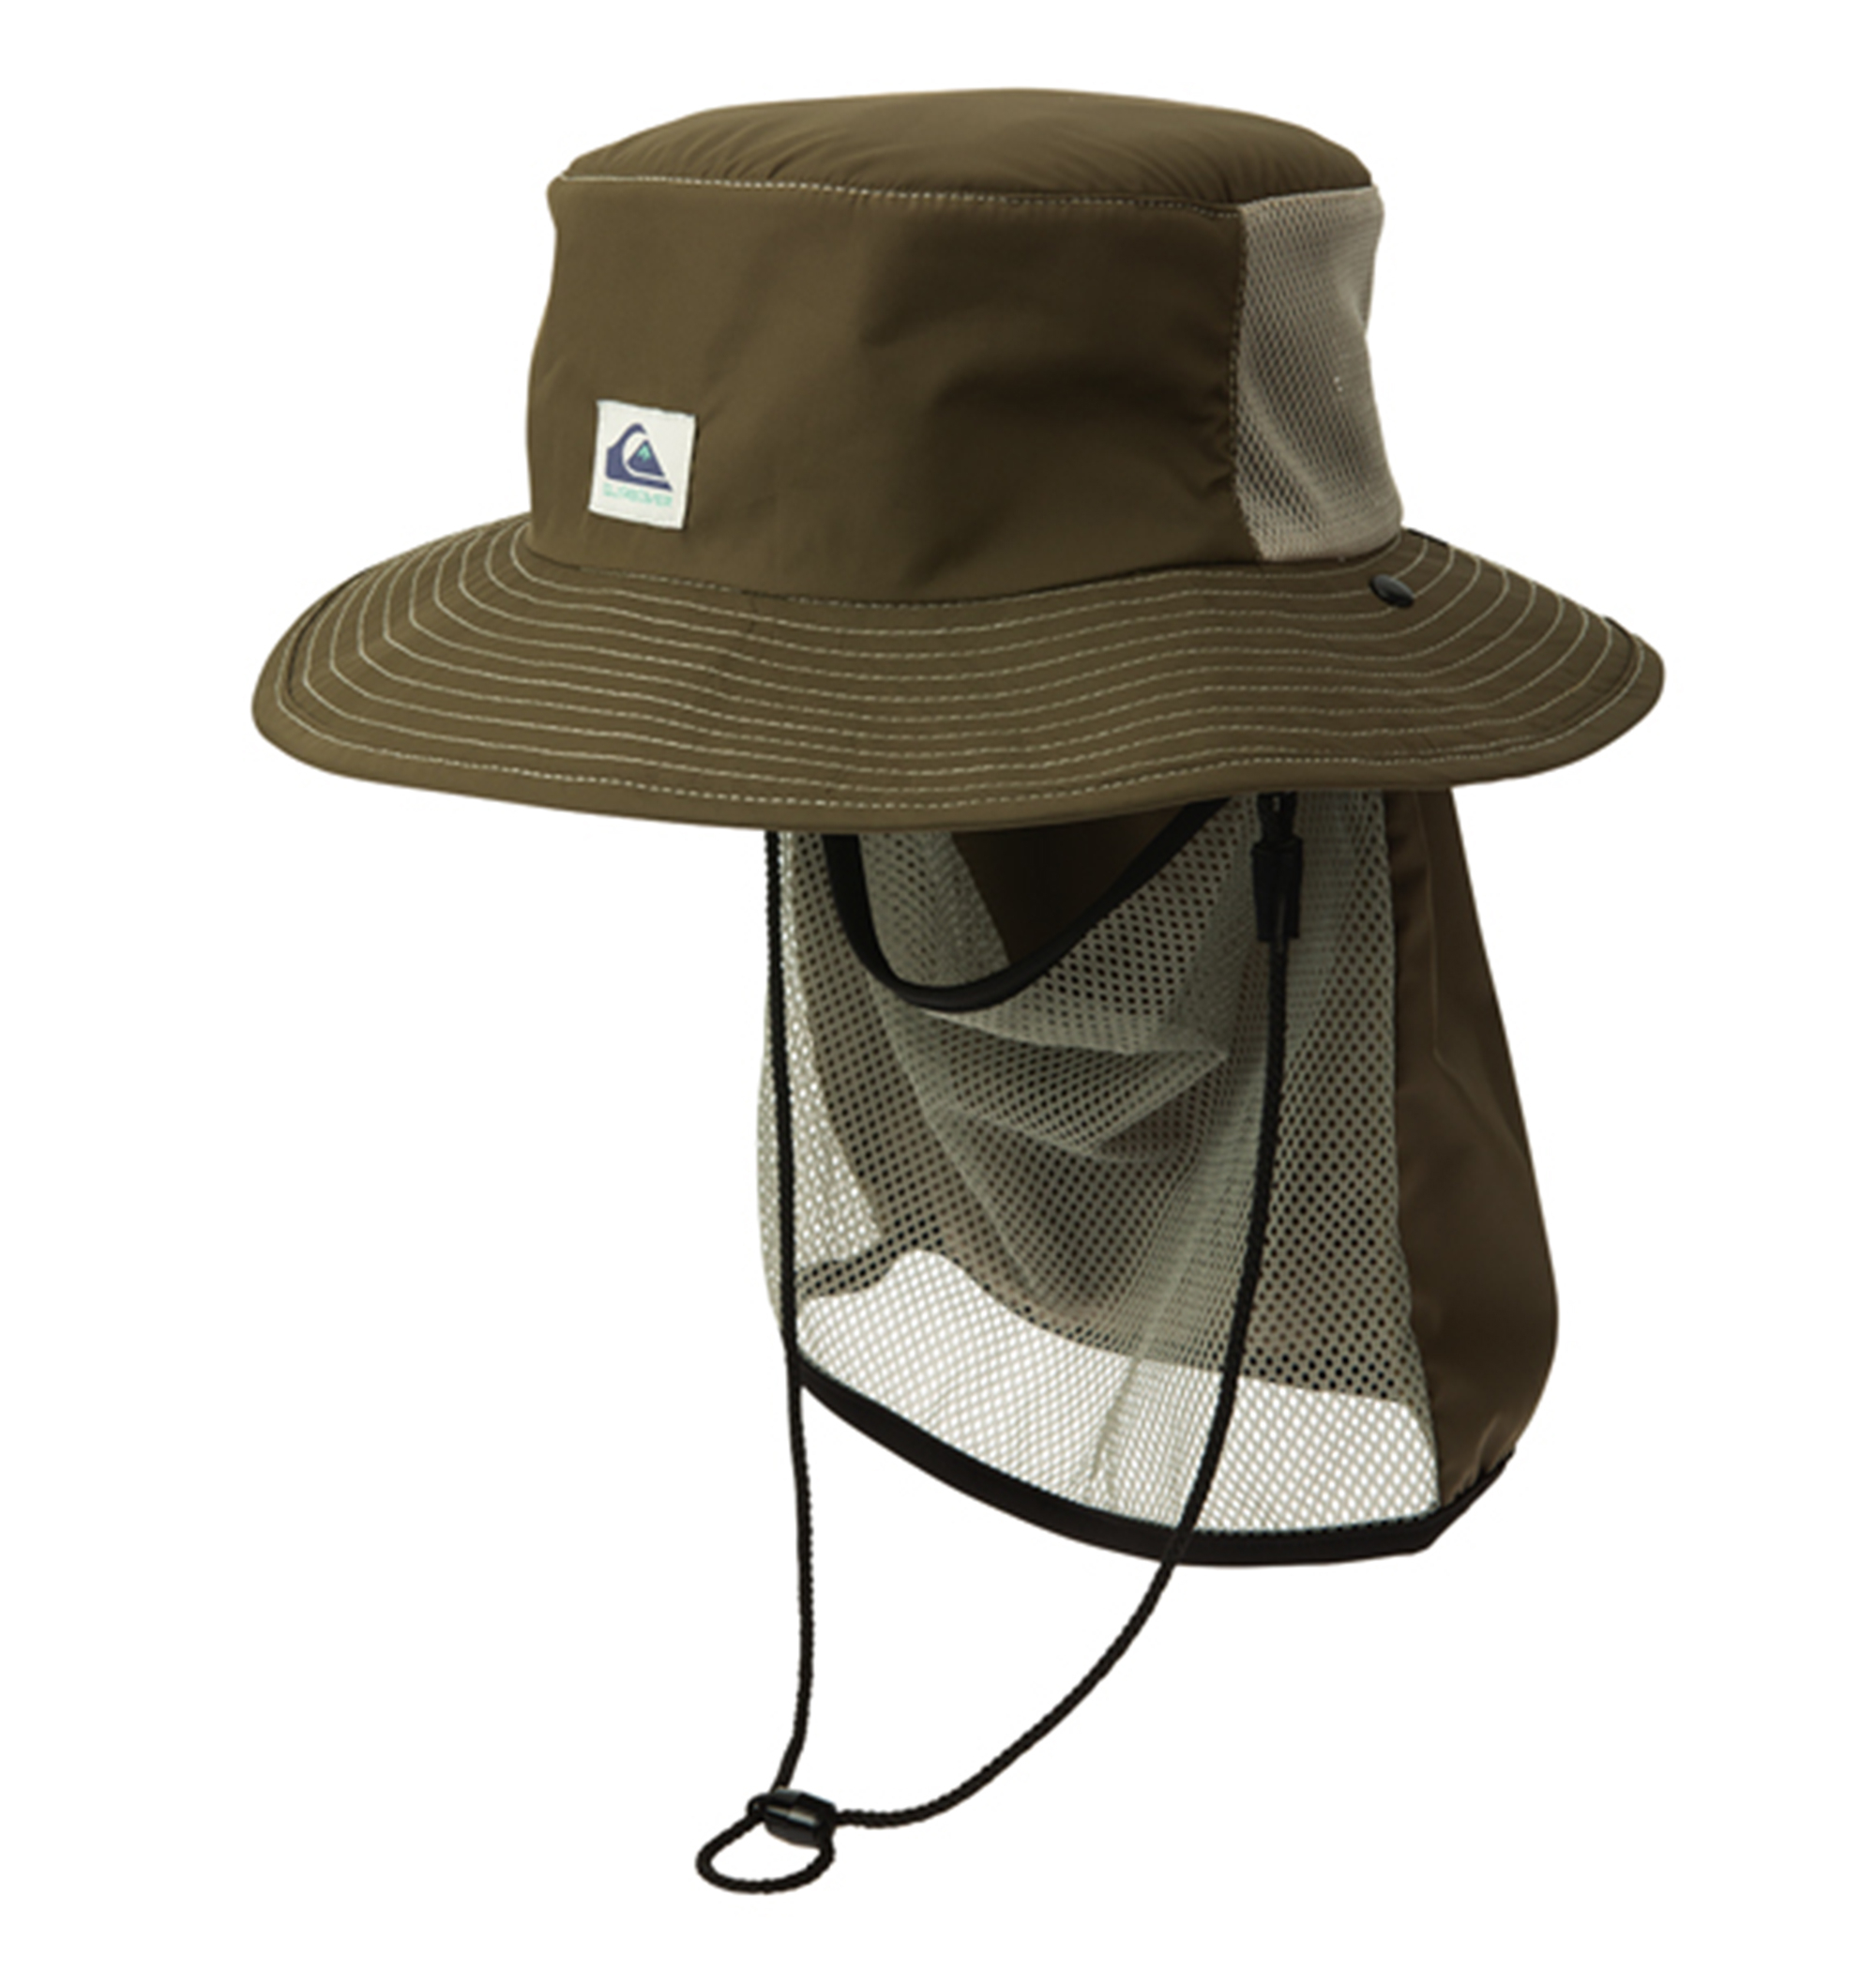 UV SUP CAMP HAT ポリエステル100% UV CUT (UPF50+) 撥水加工素材の日焼け防止SUPキャンプハットの画像